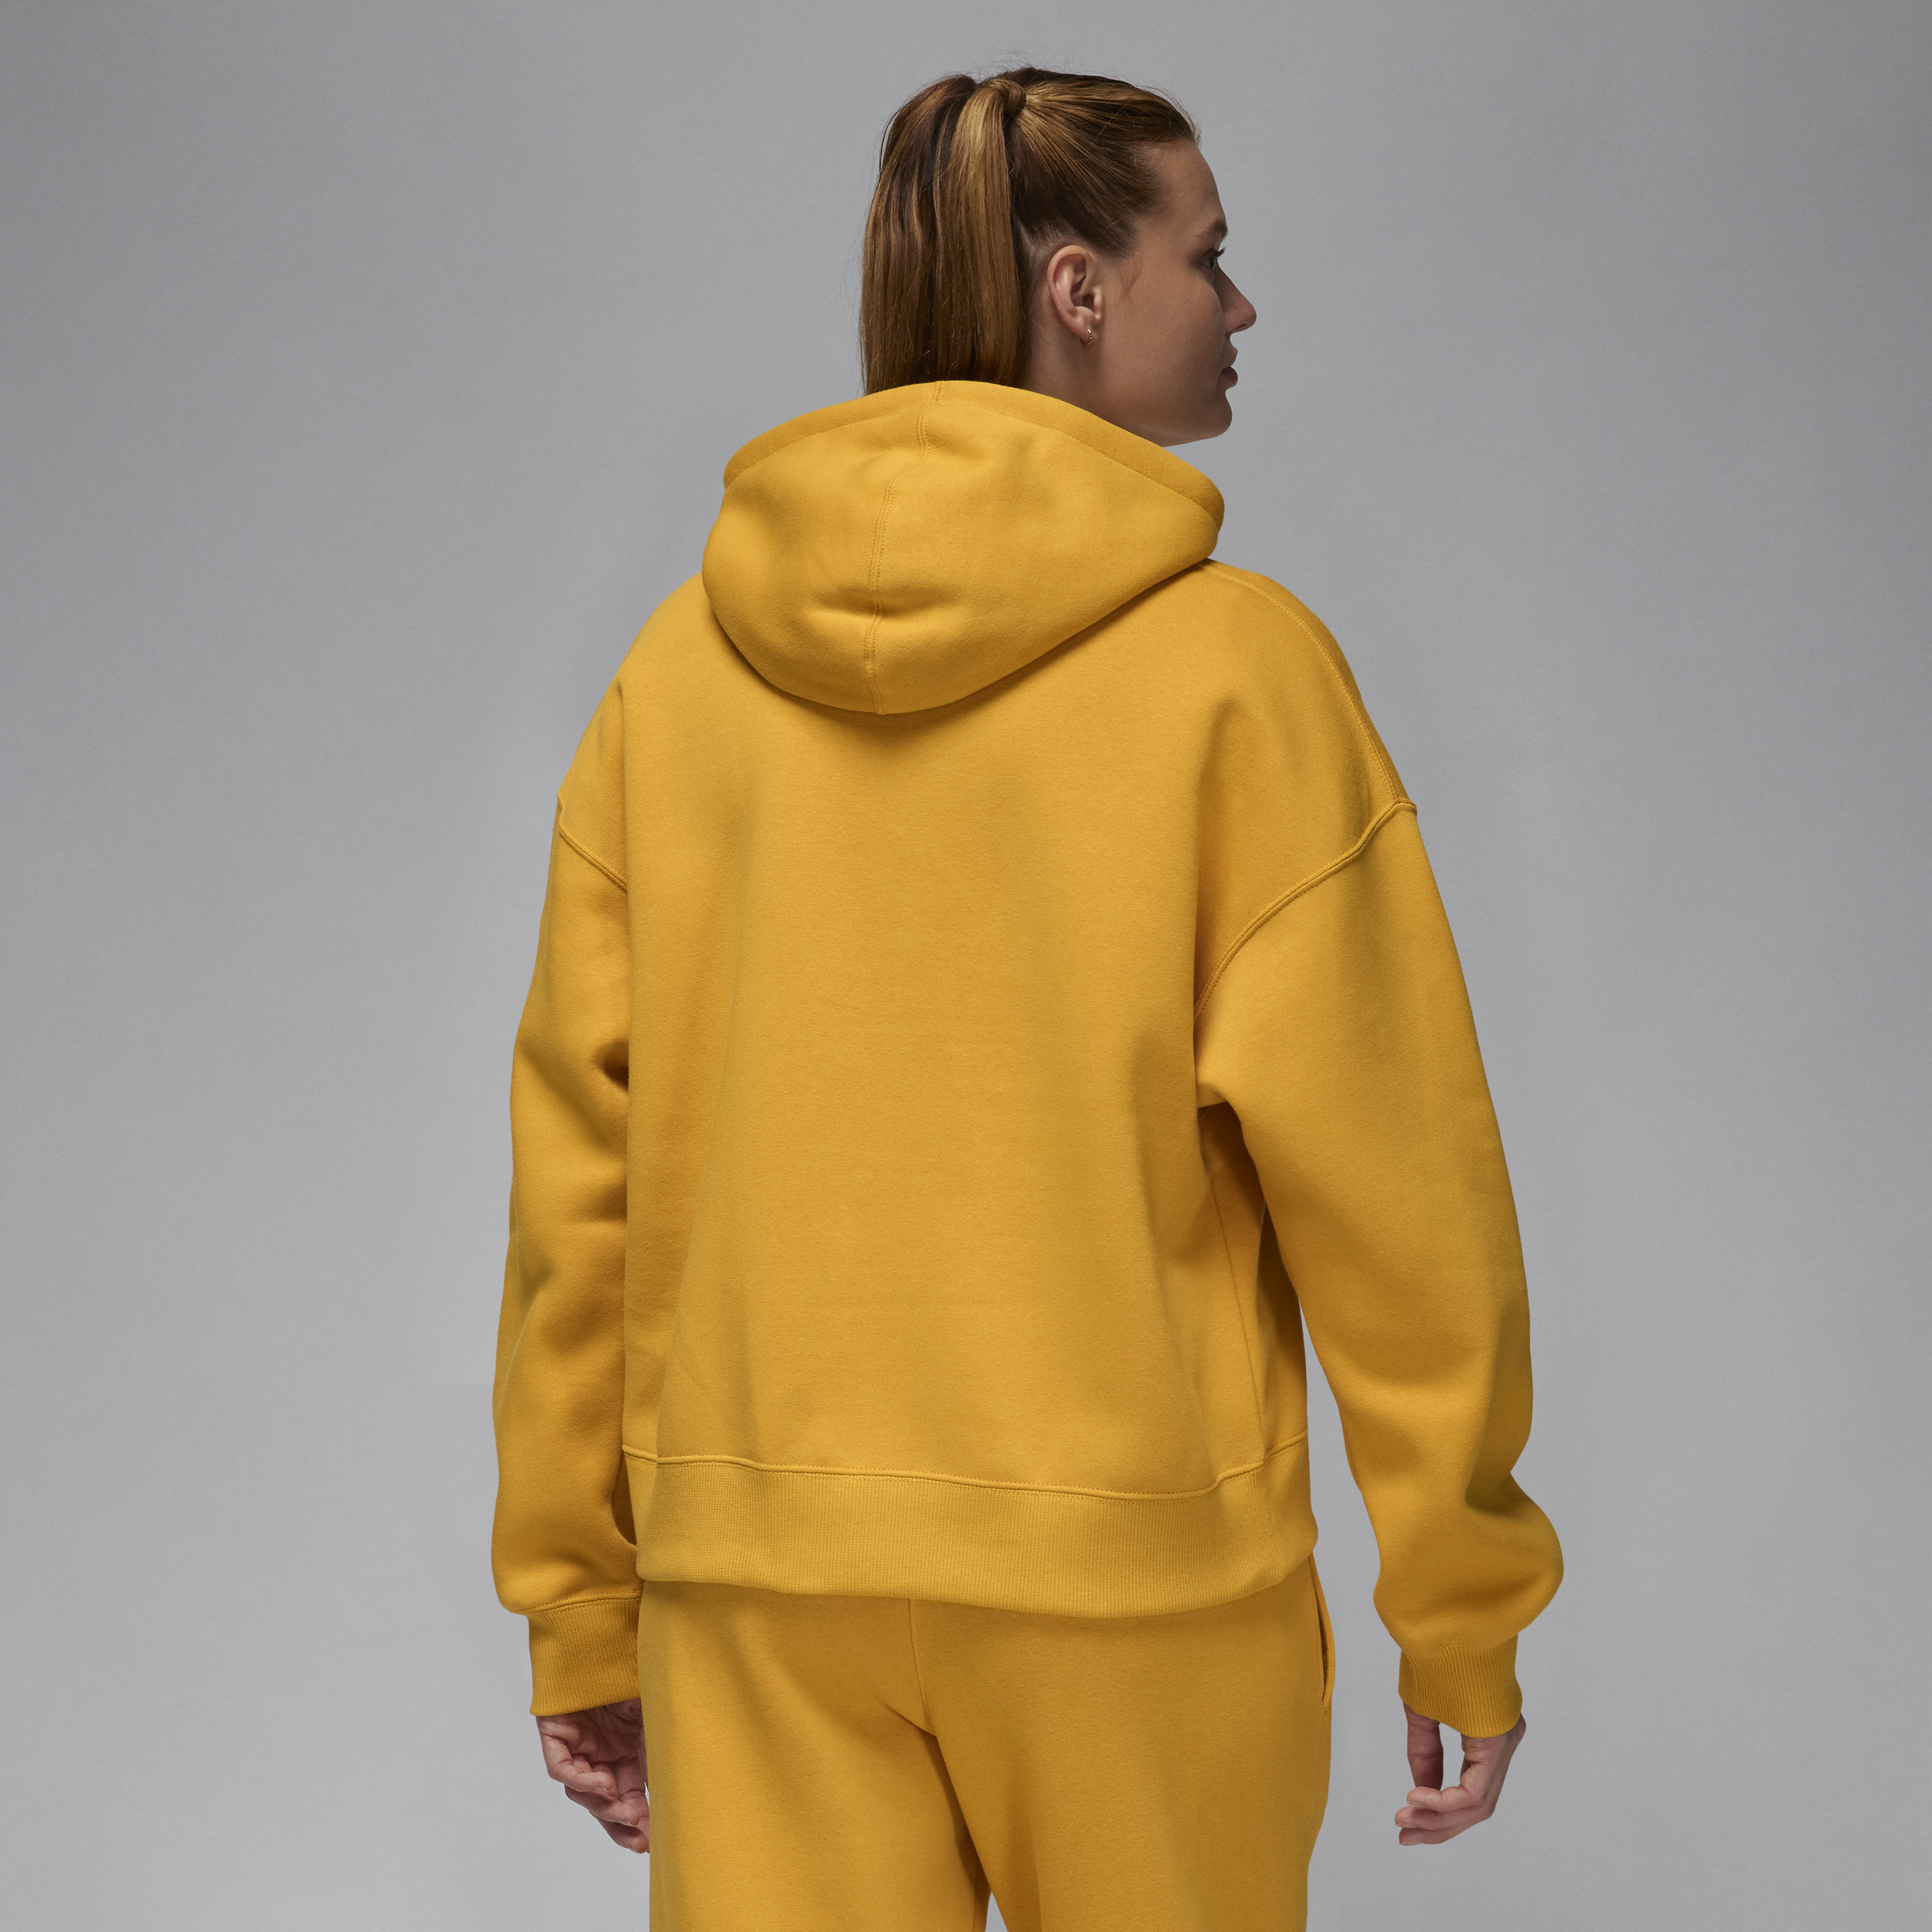 Jordan Brooklyn Fleece hoodie voor dames Geel